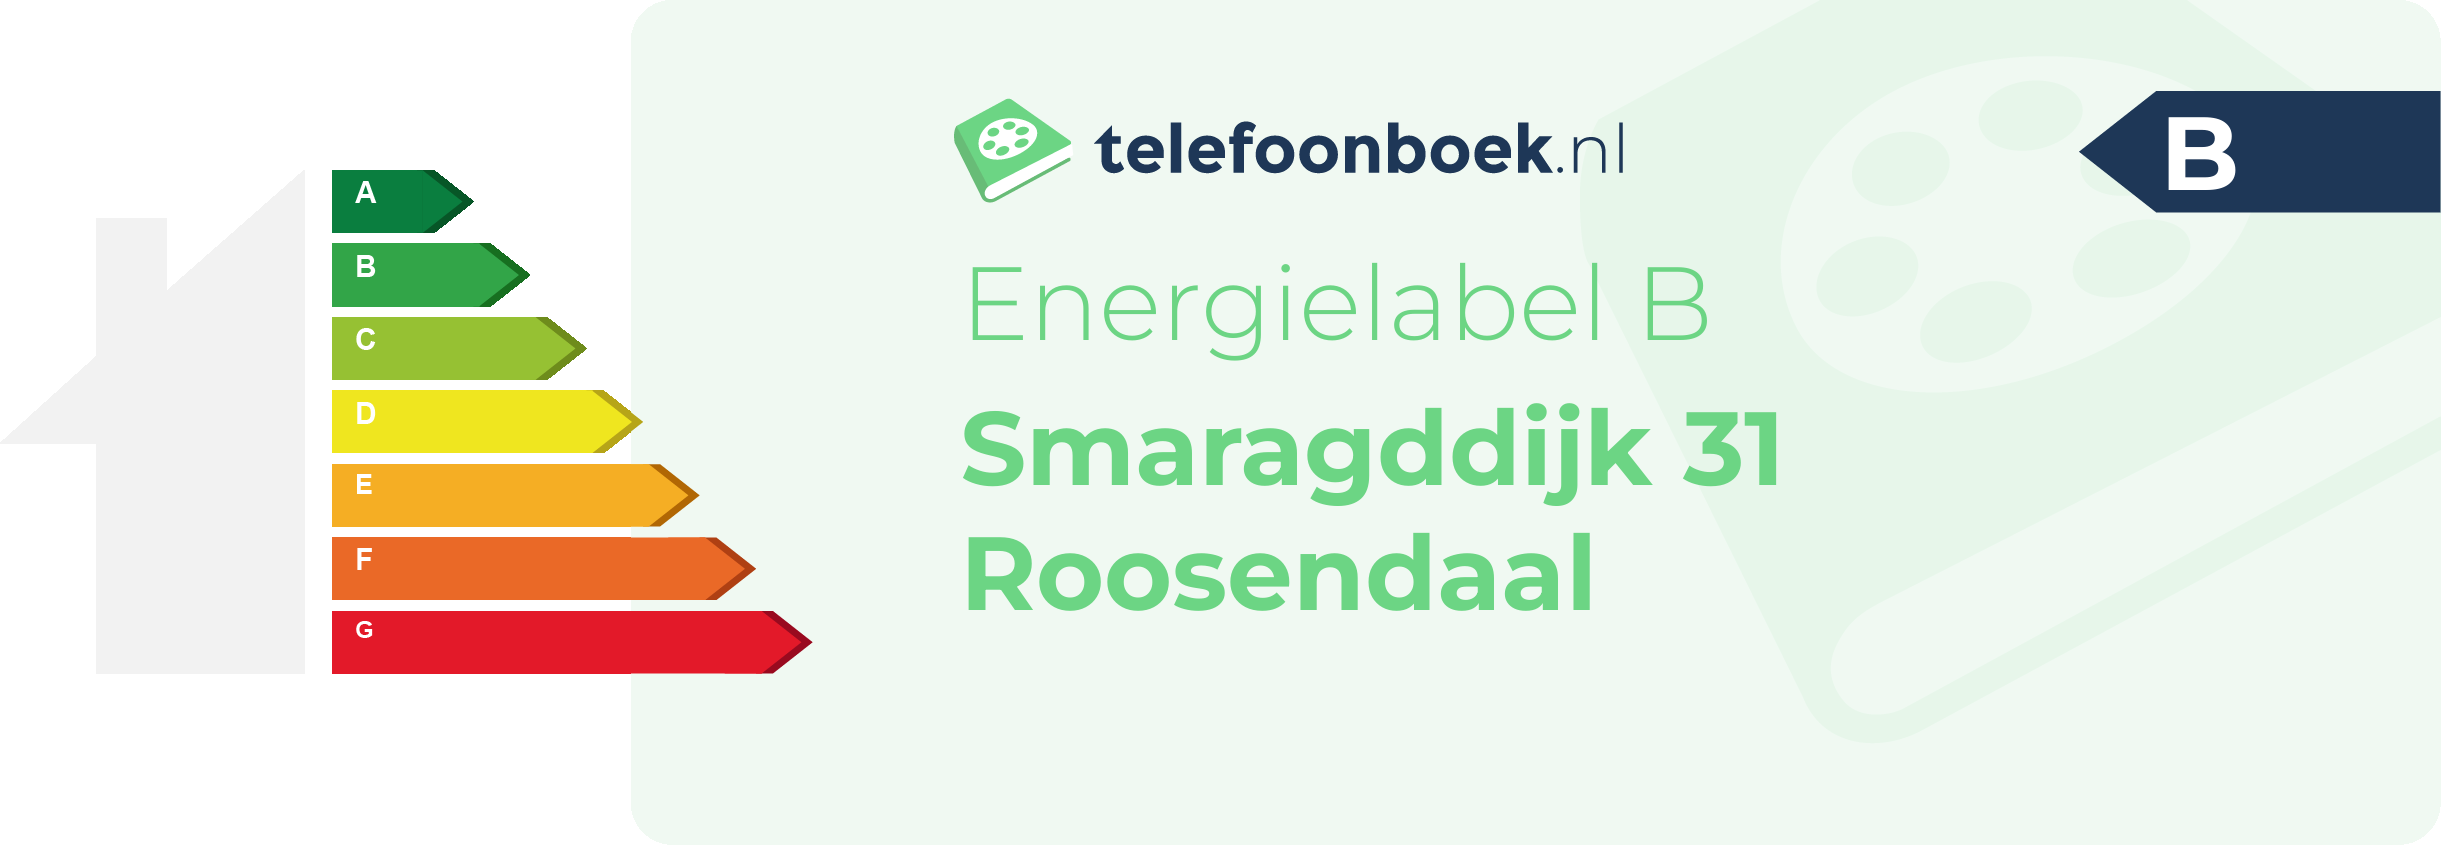 Energielabel Smaragddijk 31 Roosendaal